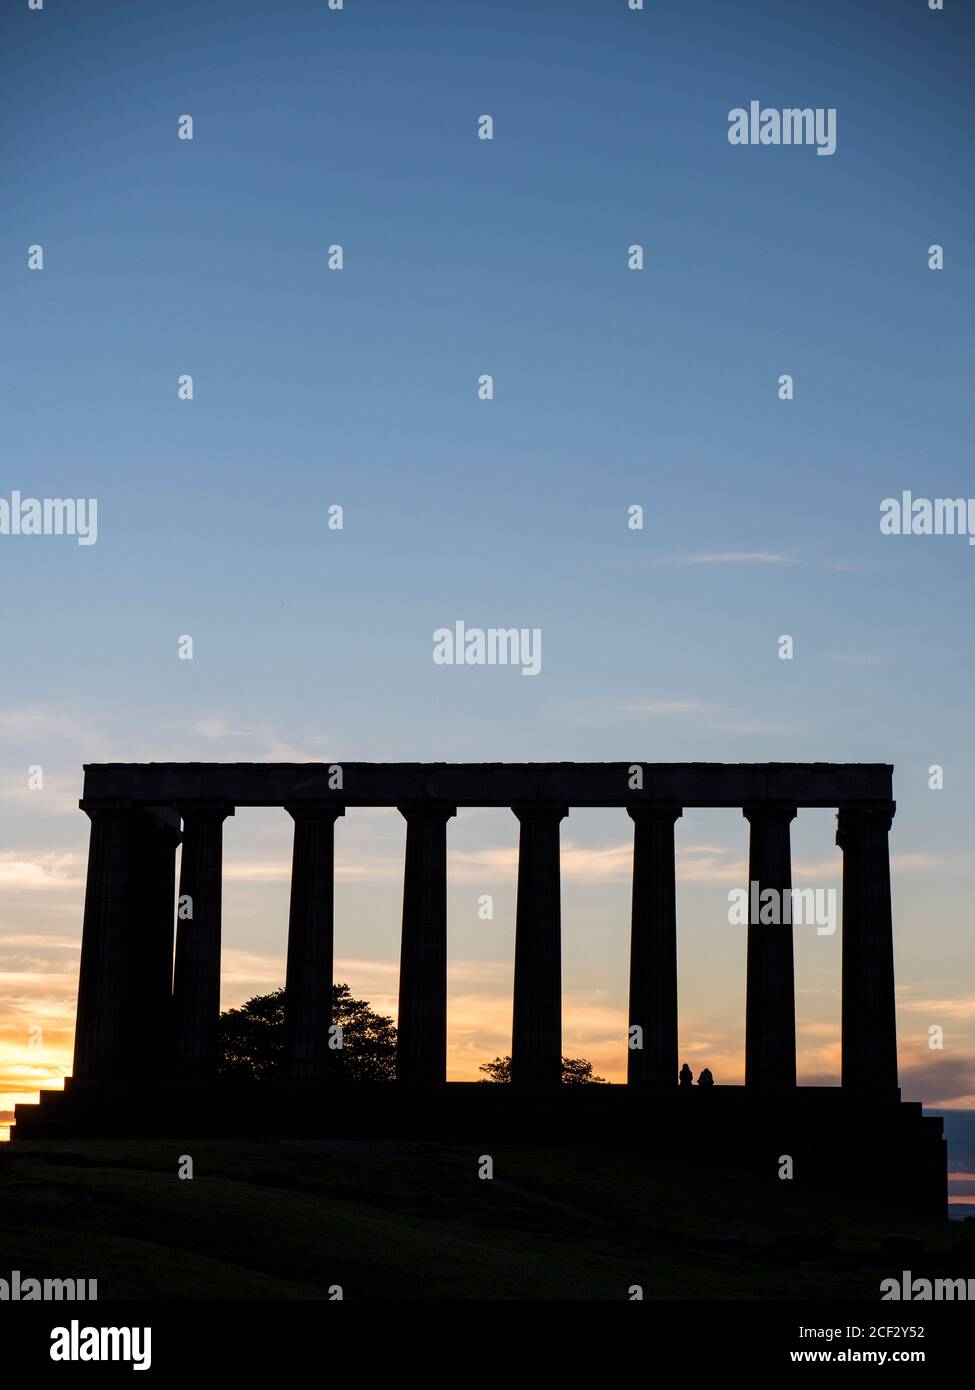 Silhouette of two Teenagers, National Monument of Scotland, Edinburgh, Scotland, UK, GB. Stock Photo